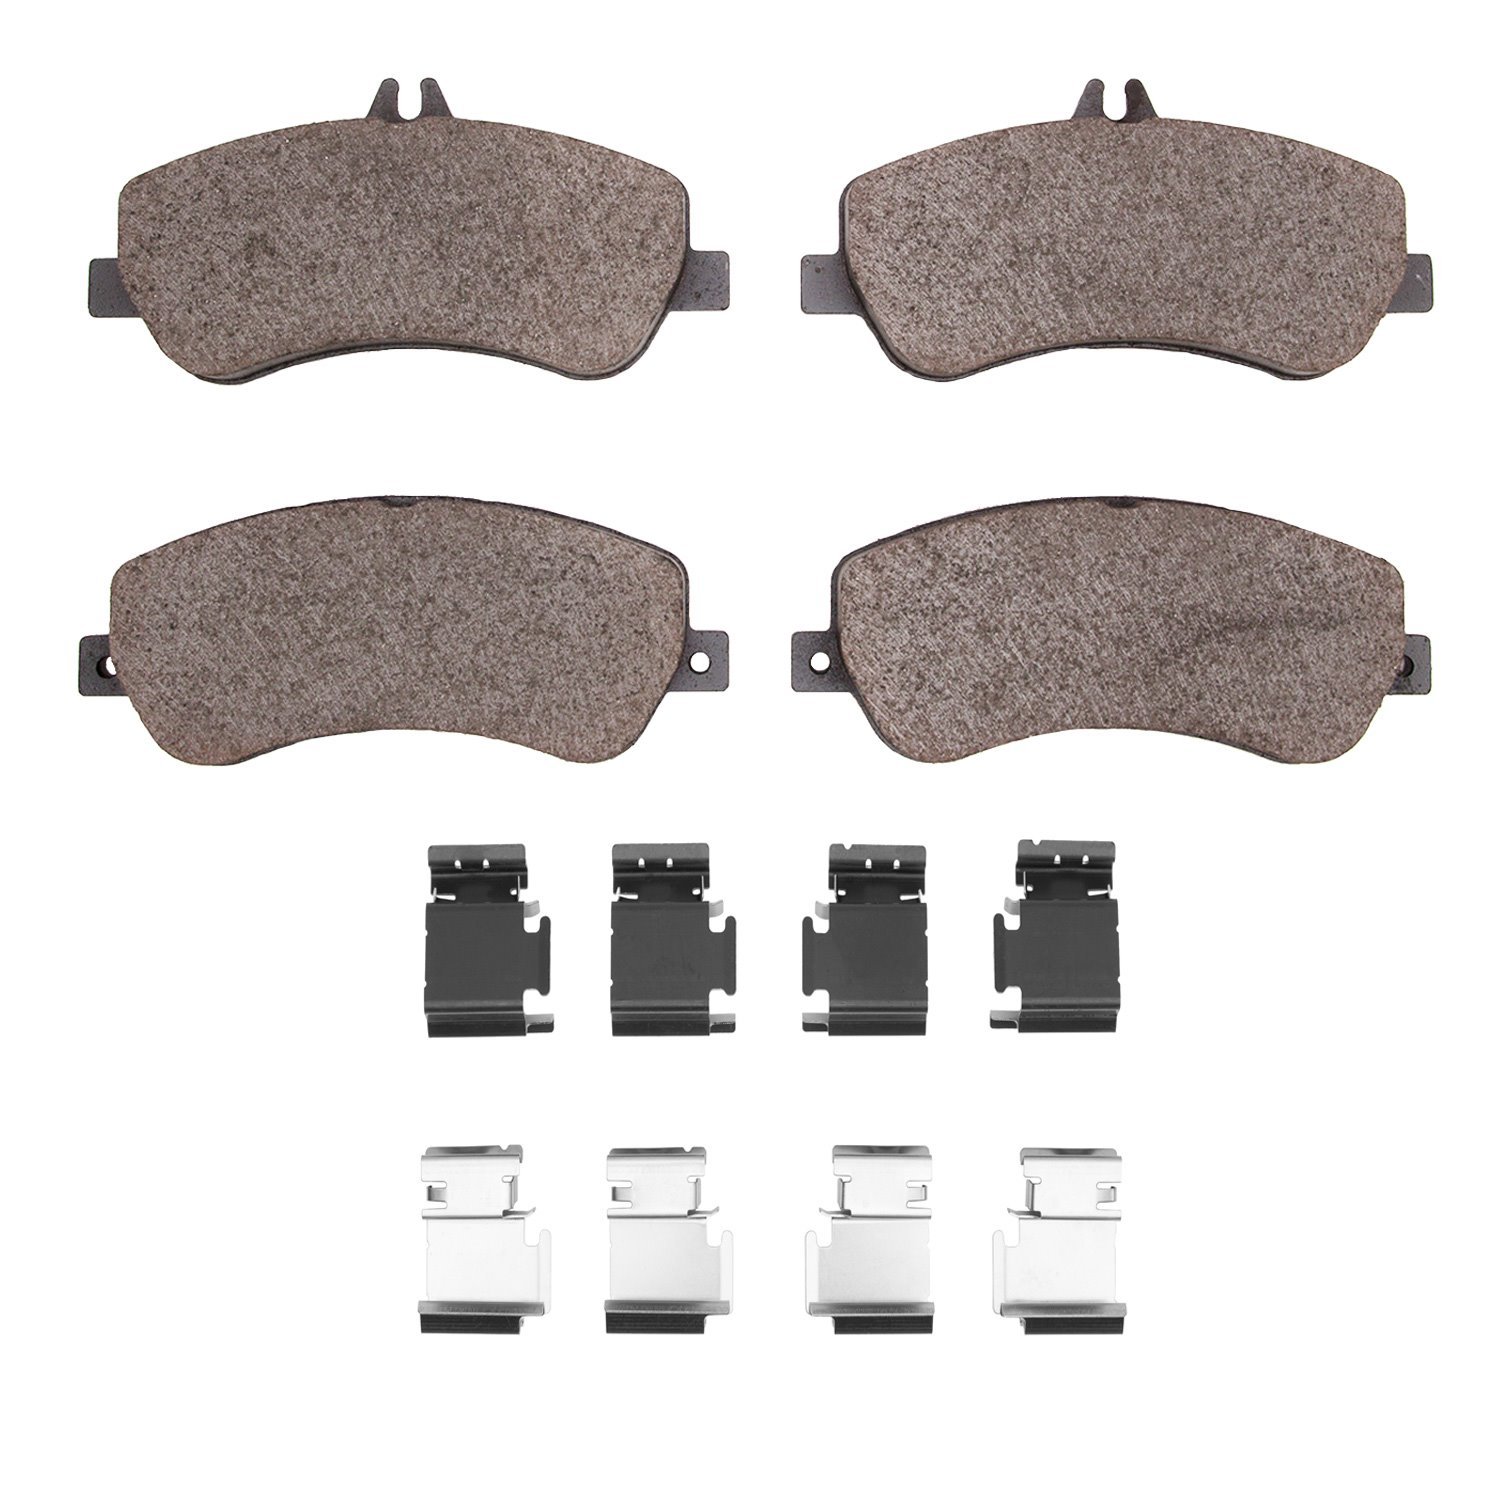 1310-1406-01 3000-Series Ceramic Brake Pads & Hardware Kit, 2009-2015 Mercedes-Benz, Position: Front